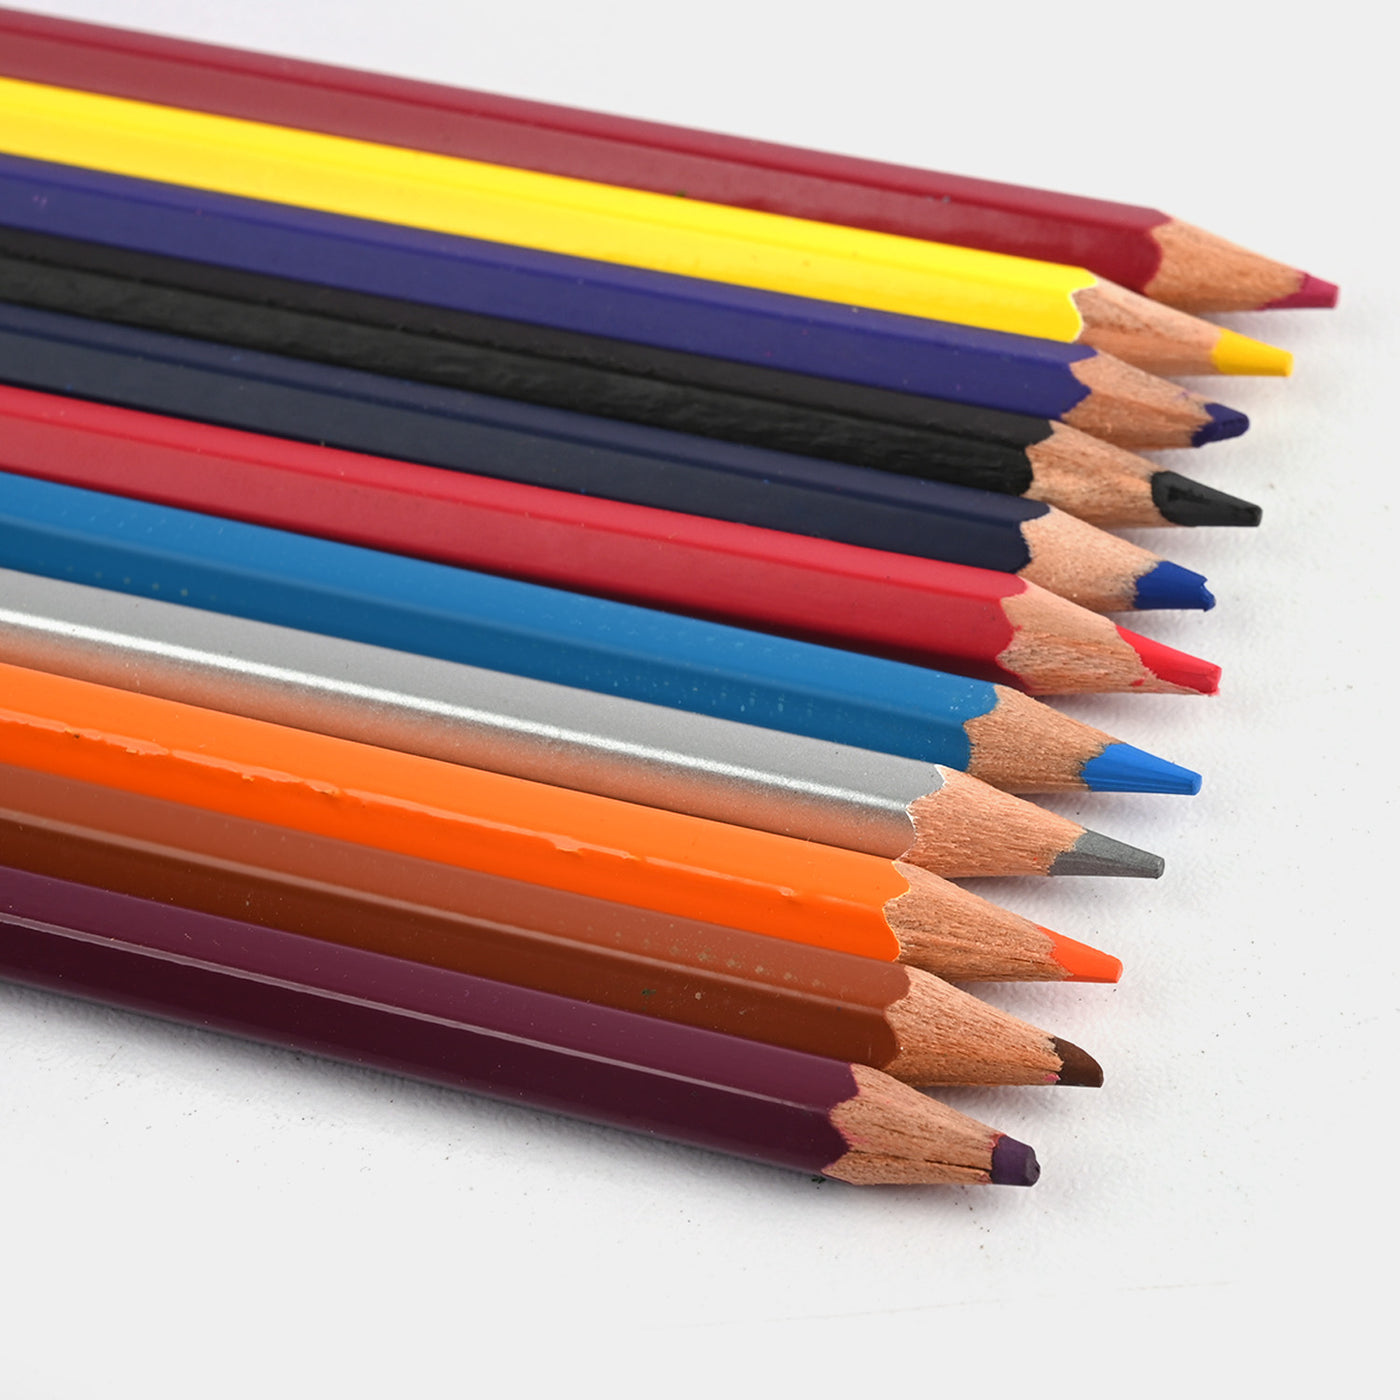 12 Color Pencils FOR KIDS